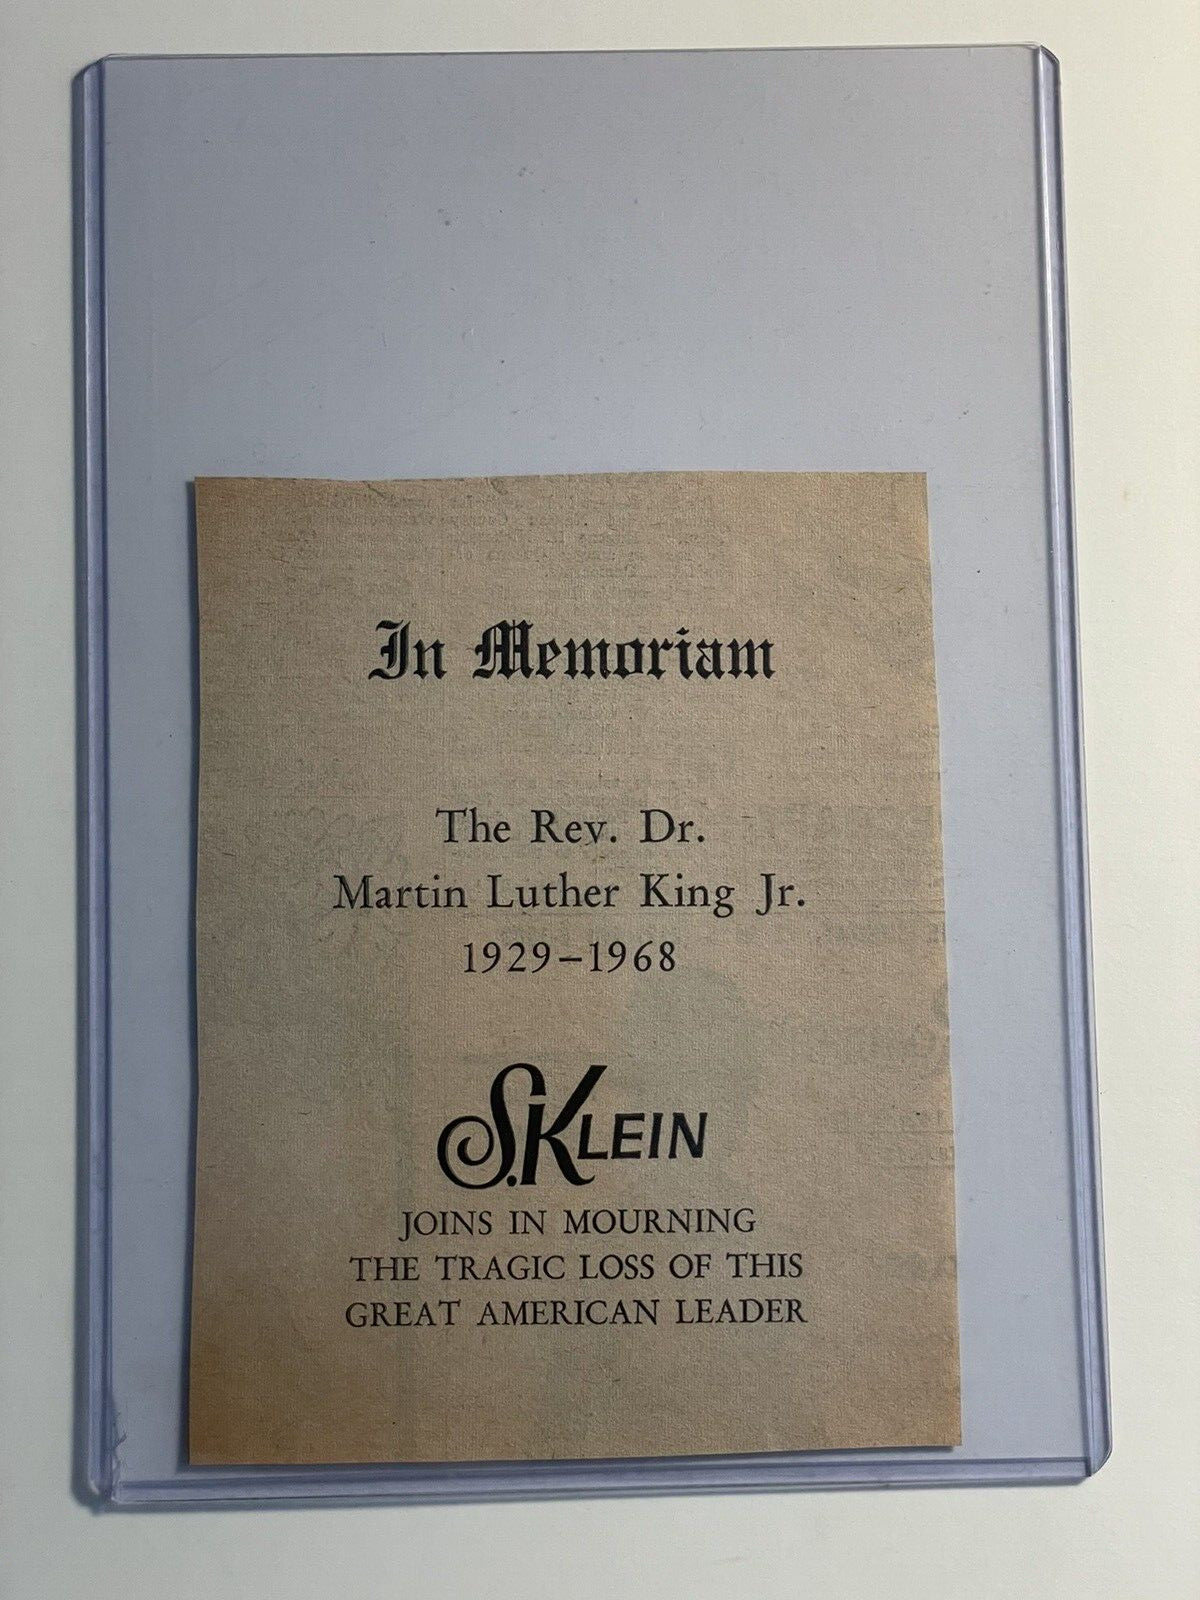 Newark S.Klein Condolence King Assassination Civil Rights 1968 #historyinpieces